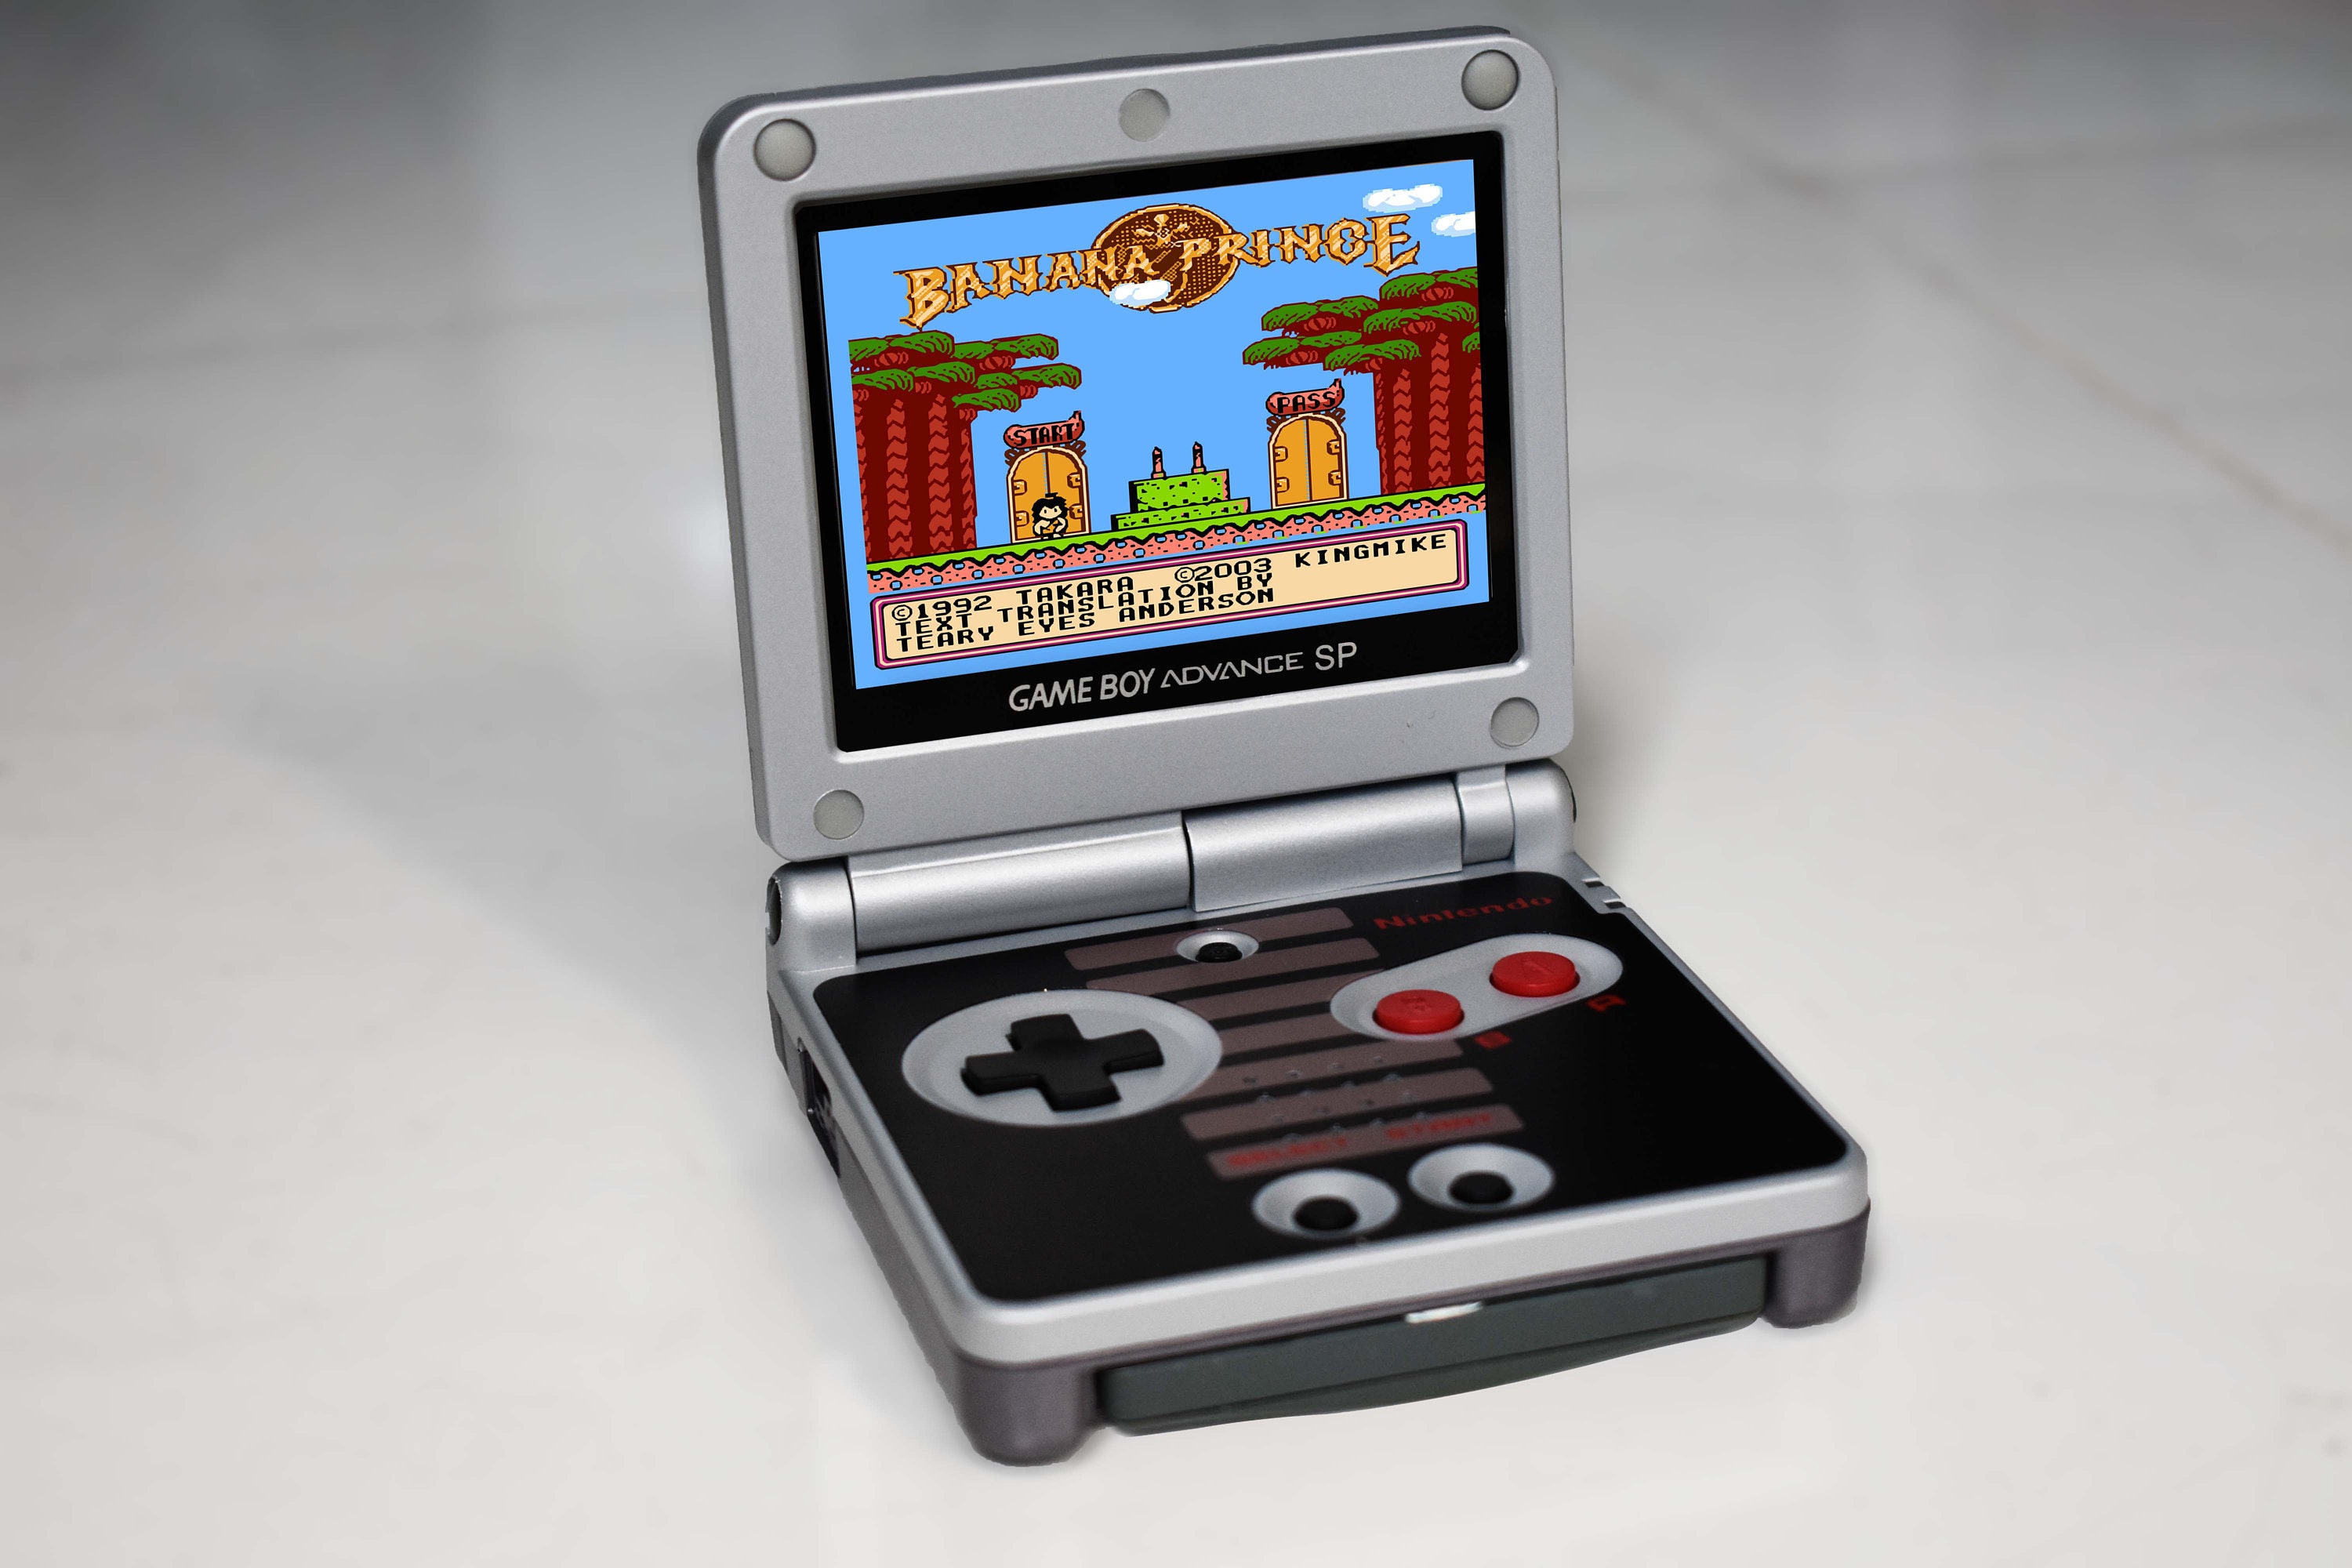 Game Boy Advance SP Skins for gpSPhone by jospinoj on DeviantArt